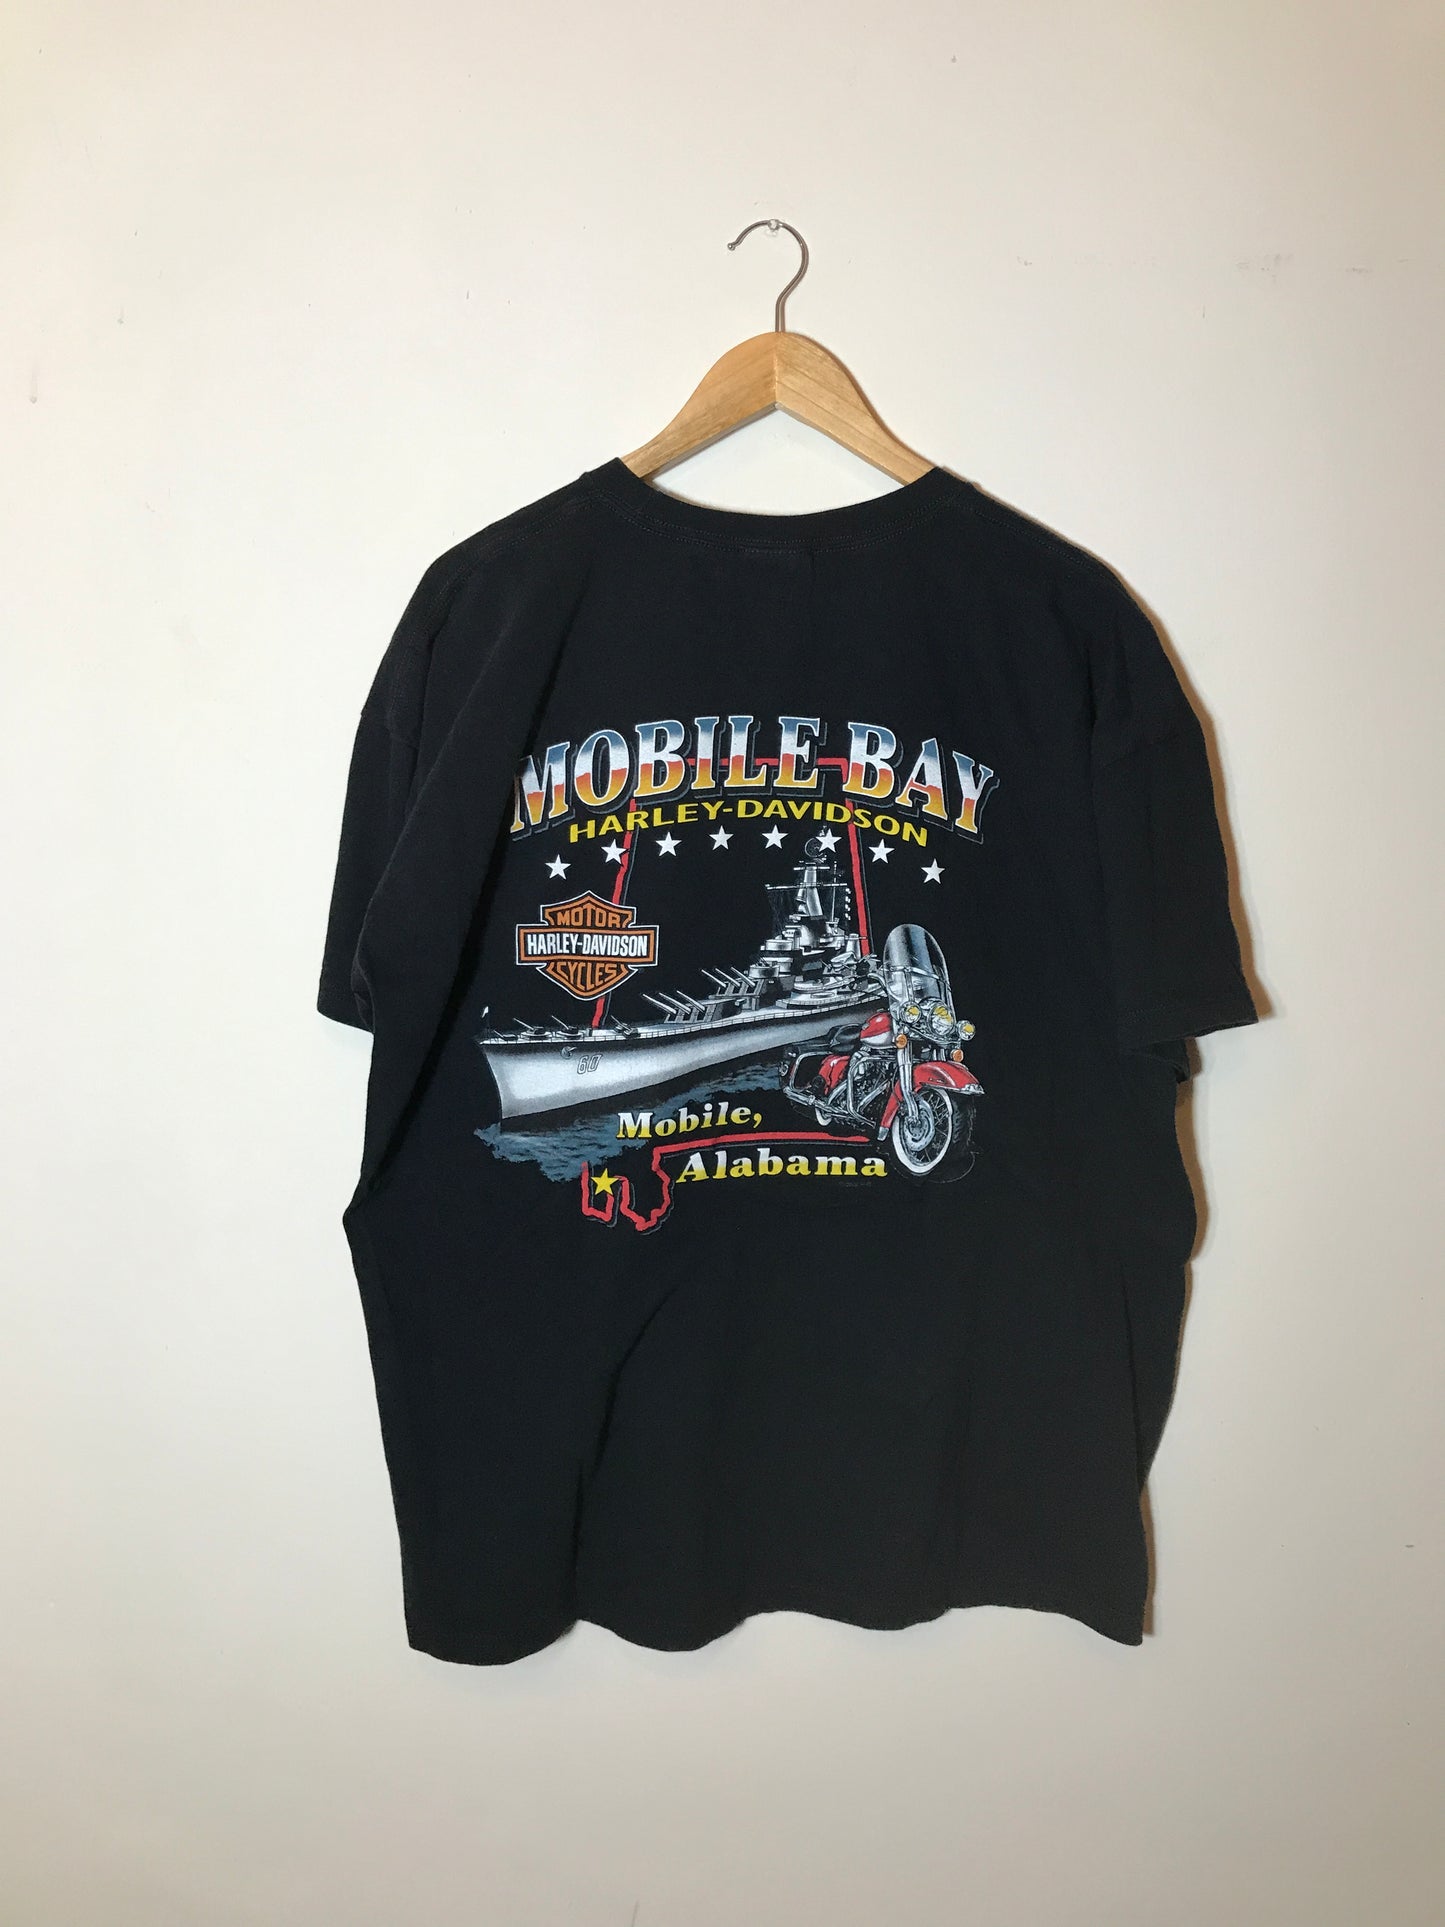 Playera Harley Davidson Mobile Bay